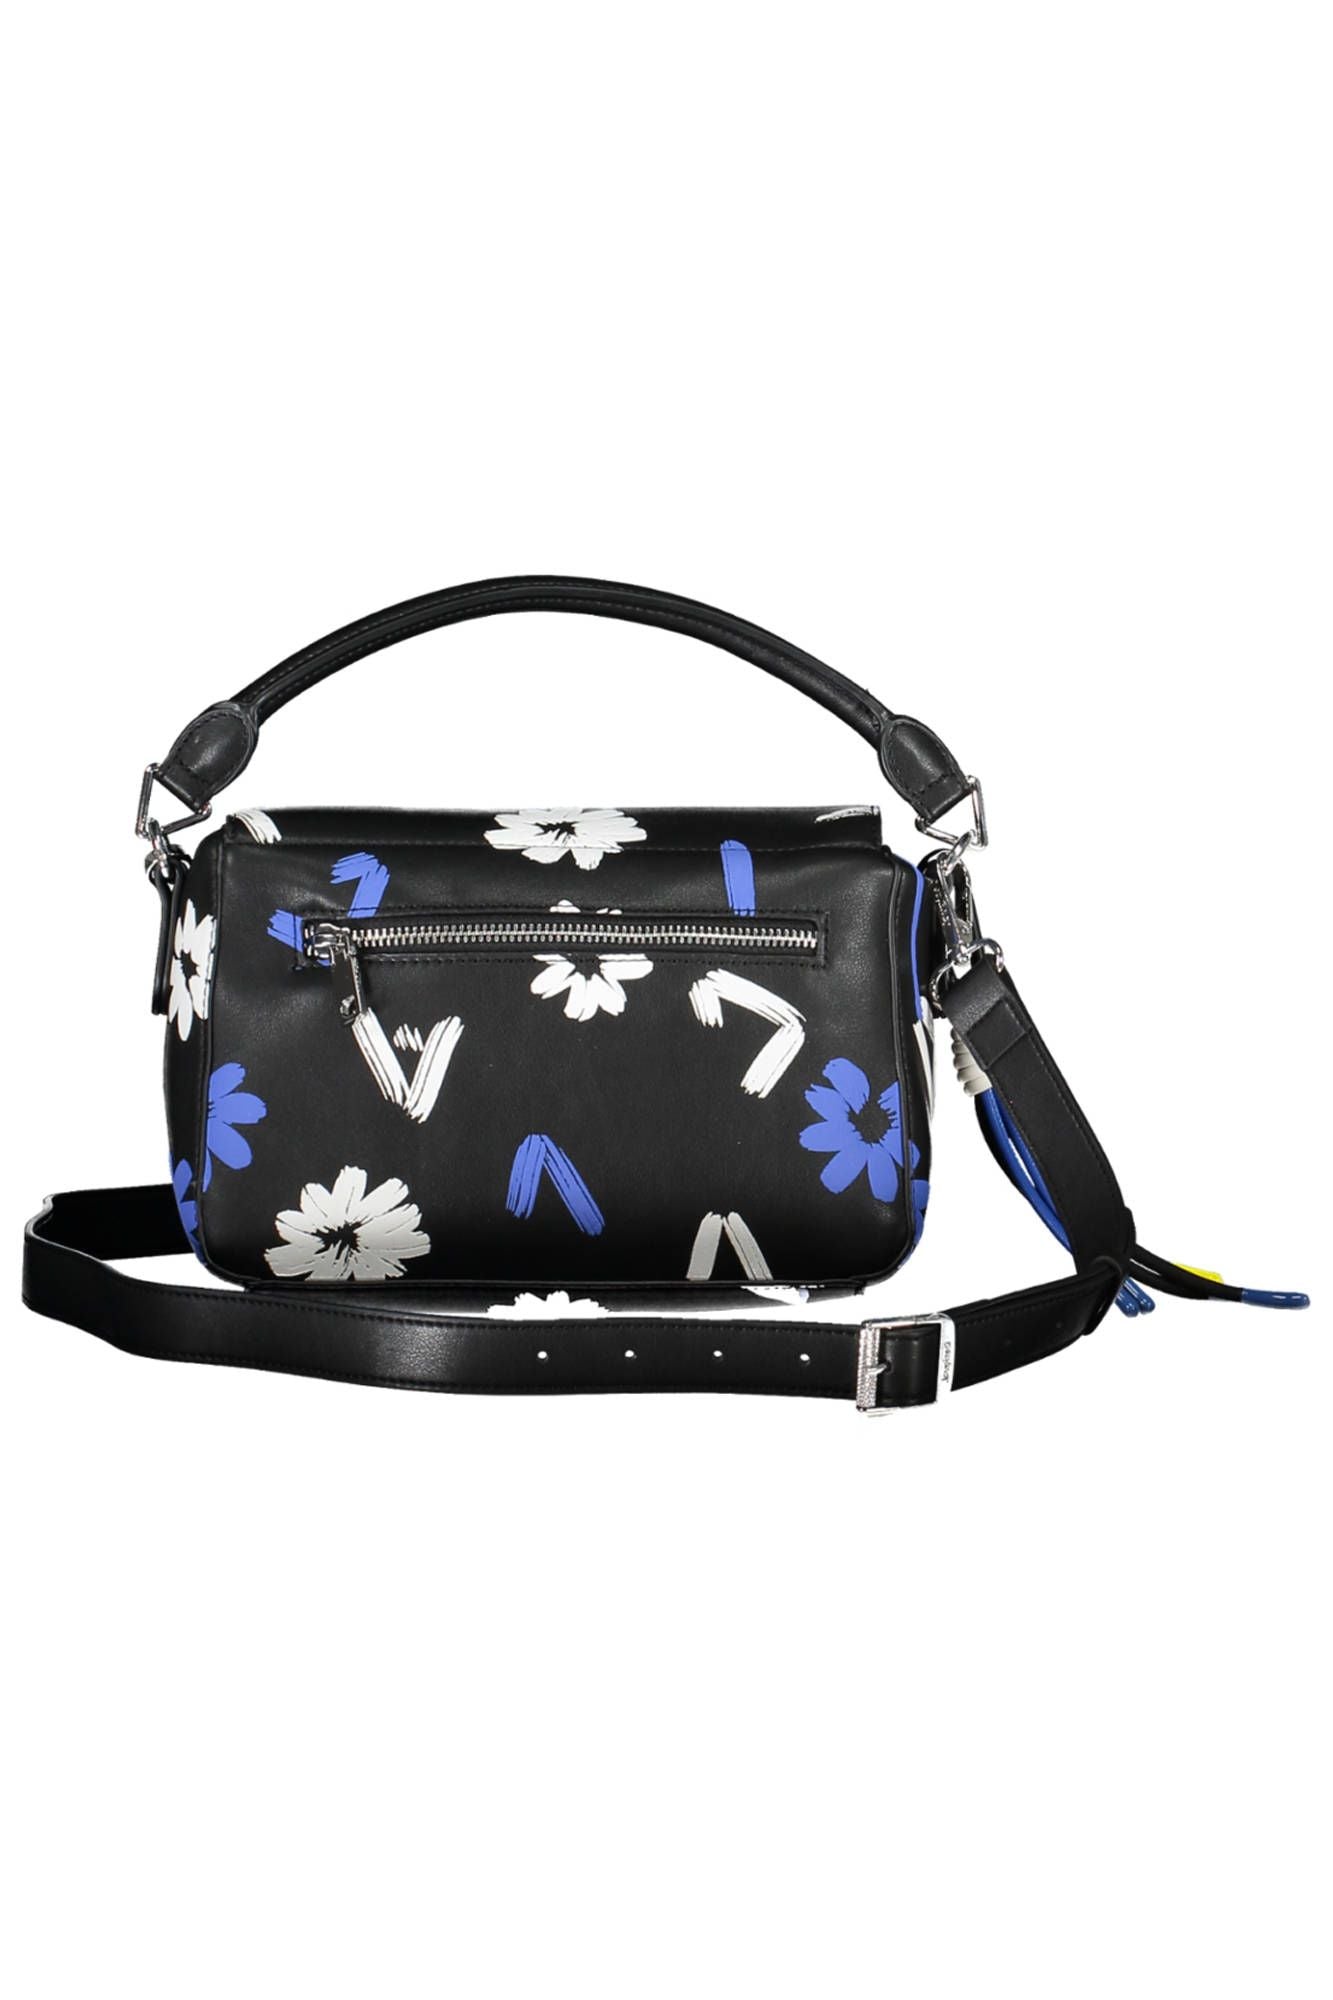 Desigual Chic Black Polyurethane Handbag with Contrasting Details